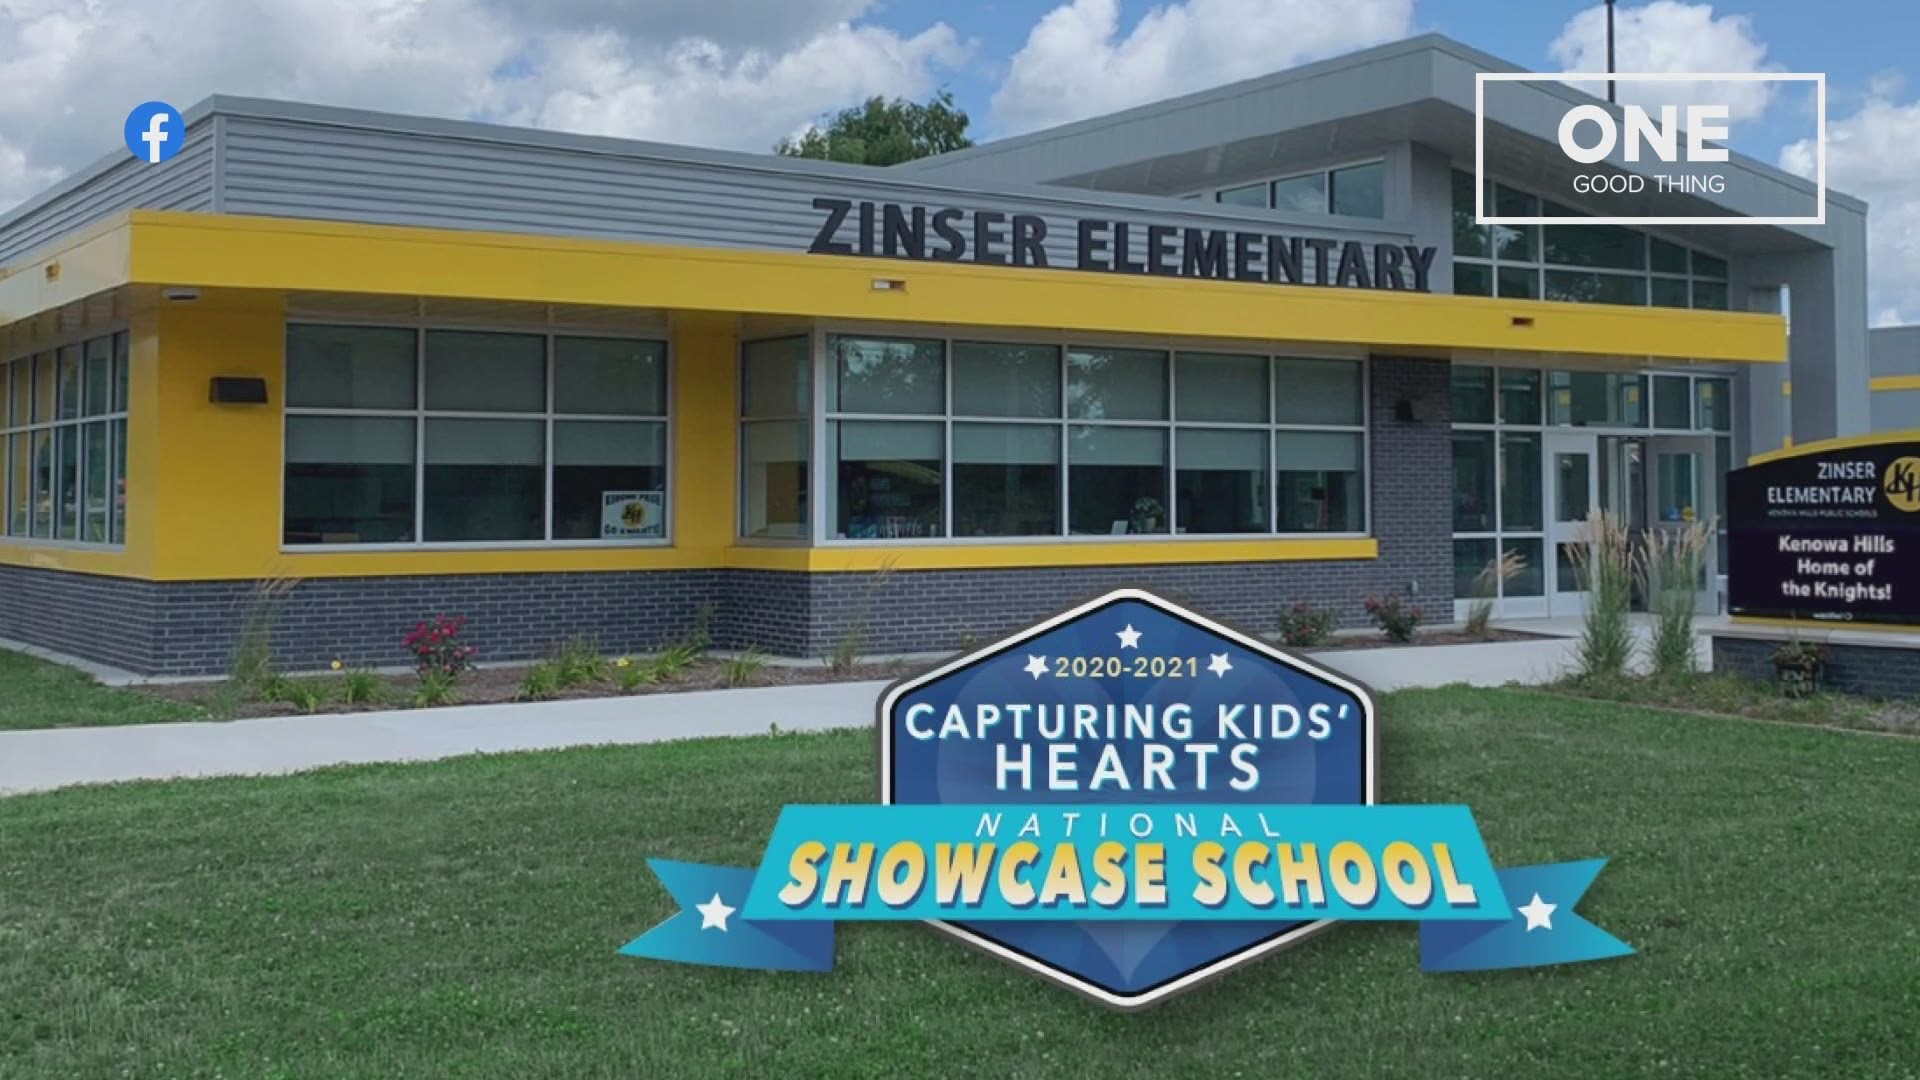 Ten schools in West Michigan received the Capturing Kids' Hearts National Showcase Schools award.